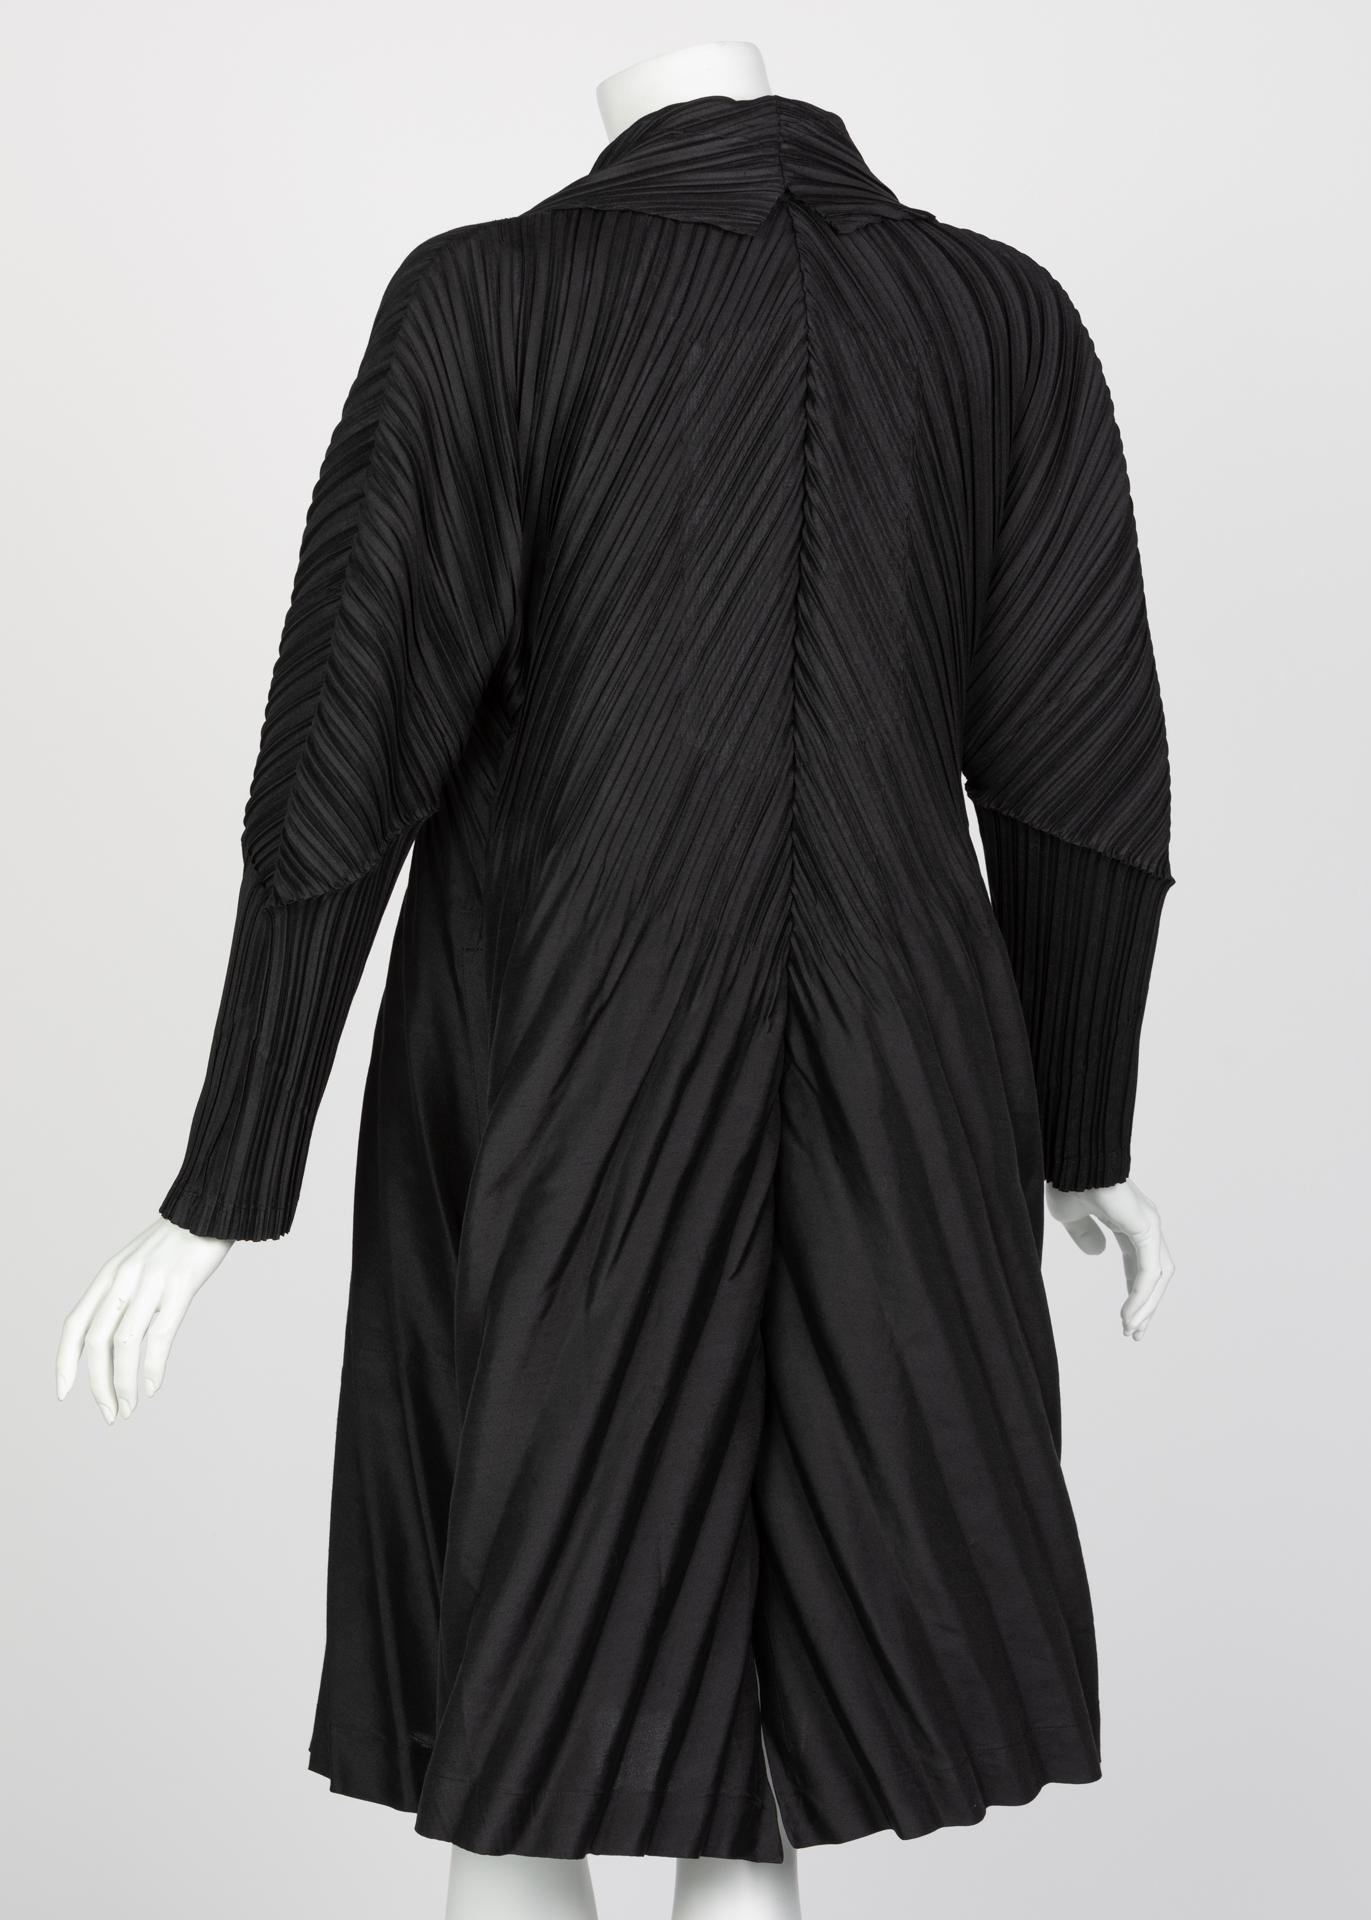 Women's or Men's Issey Miyake Black Sculptural Pleated Cocoon Coat